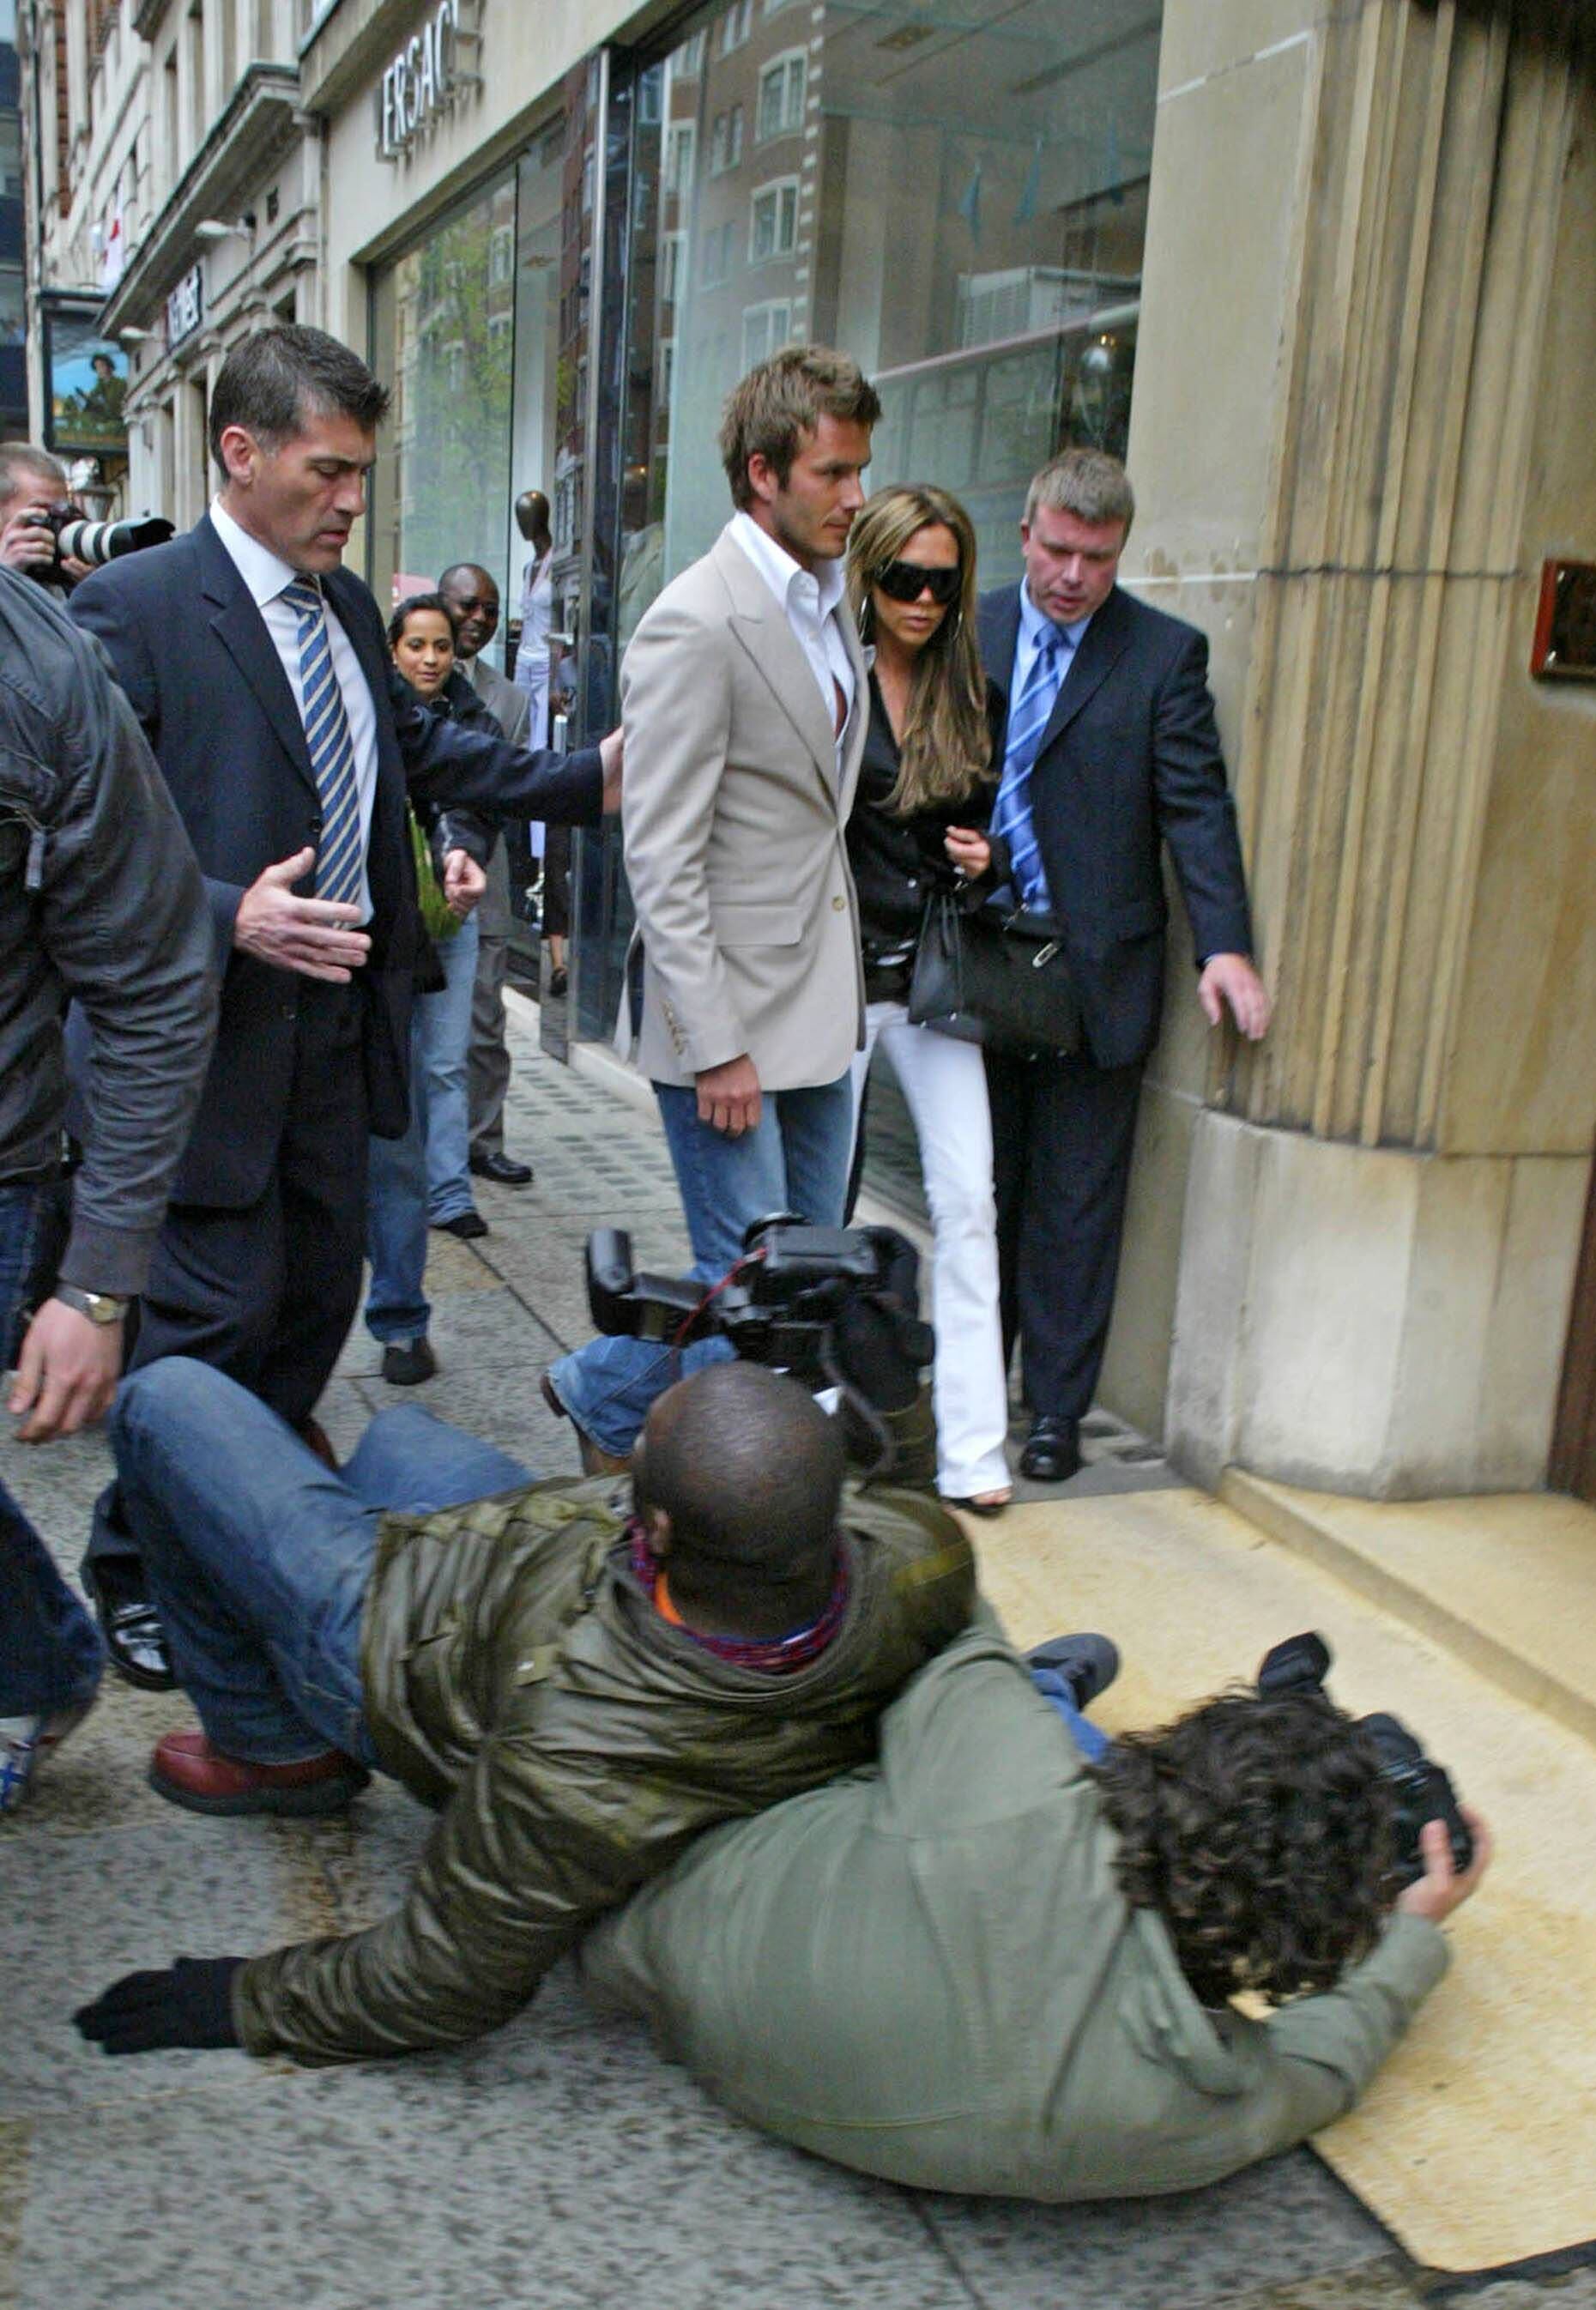 Dos paparazis caen al suelo tratando de fotografiar a David y Victoria Beckham, durante un día compras en Sloane Street, en Londres, en abril de 2006.